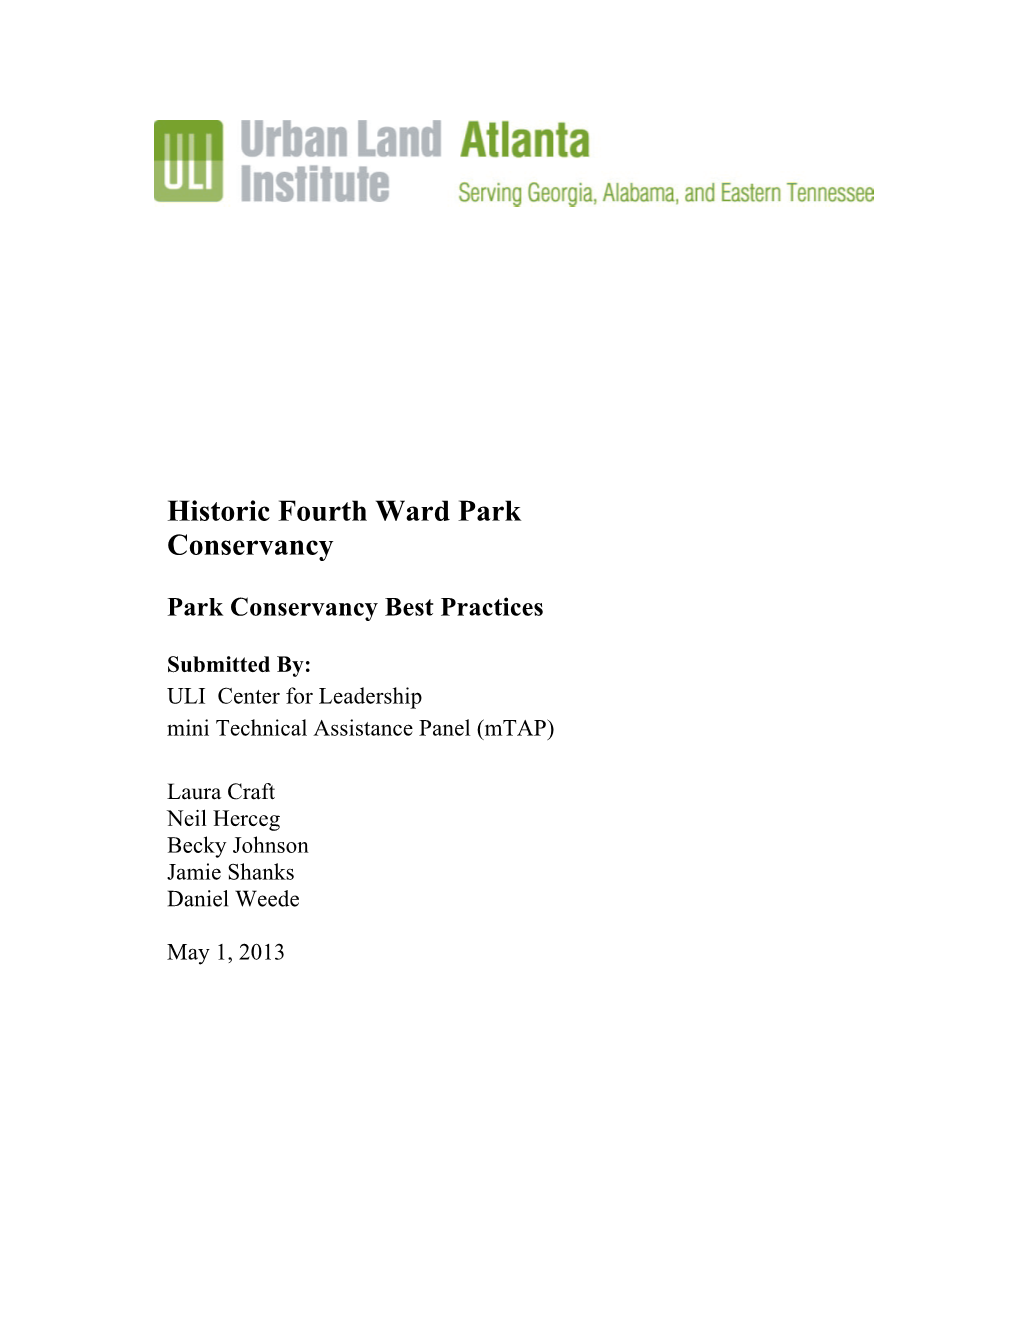 Historic Fourth Ward Park Conservancy